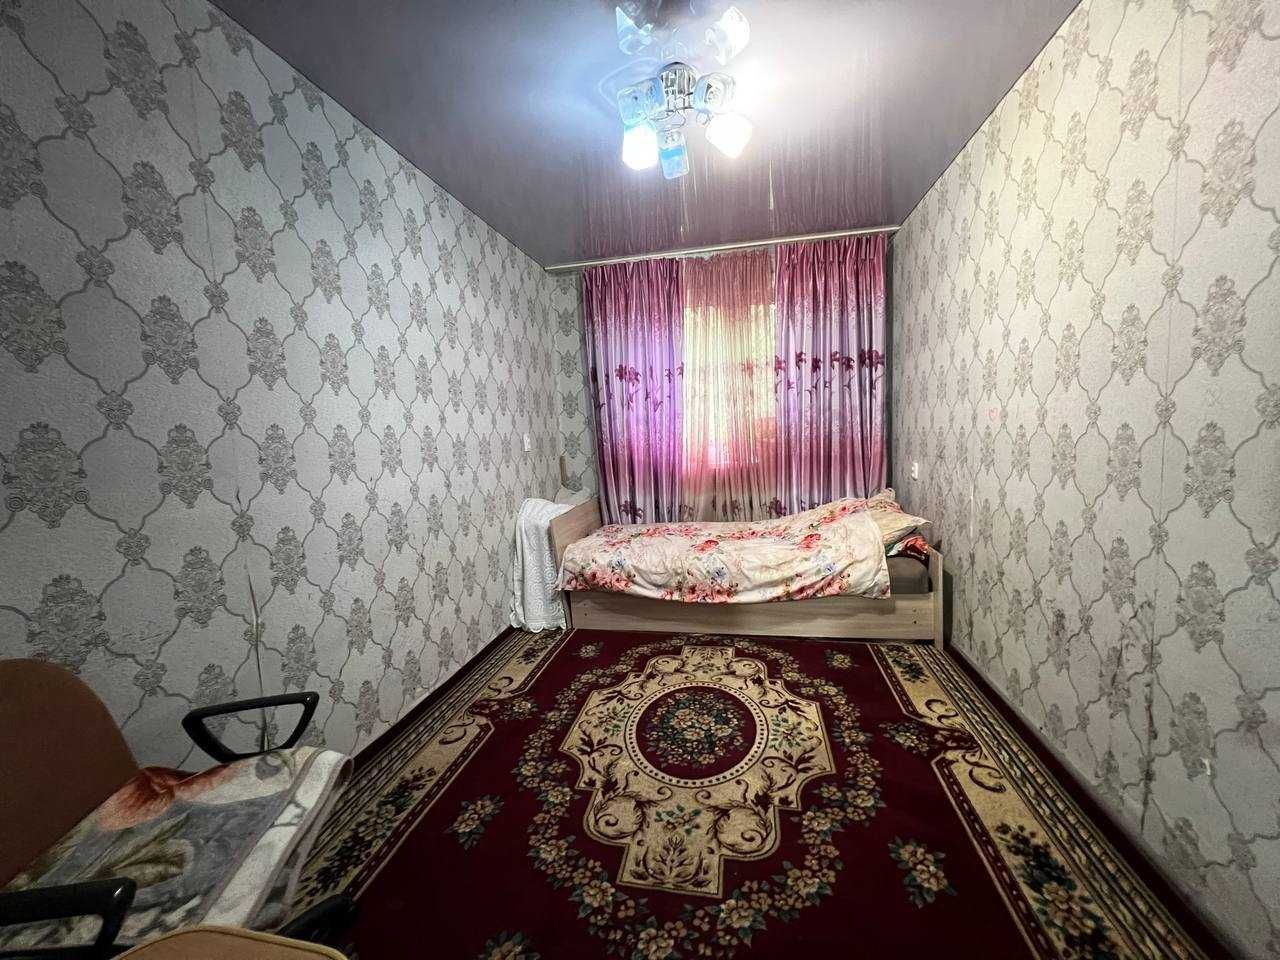 Продается 3-ех комнатная квартира в Шахтинске на 31 кв. Торг, Ипотека